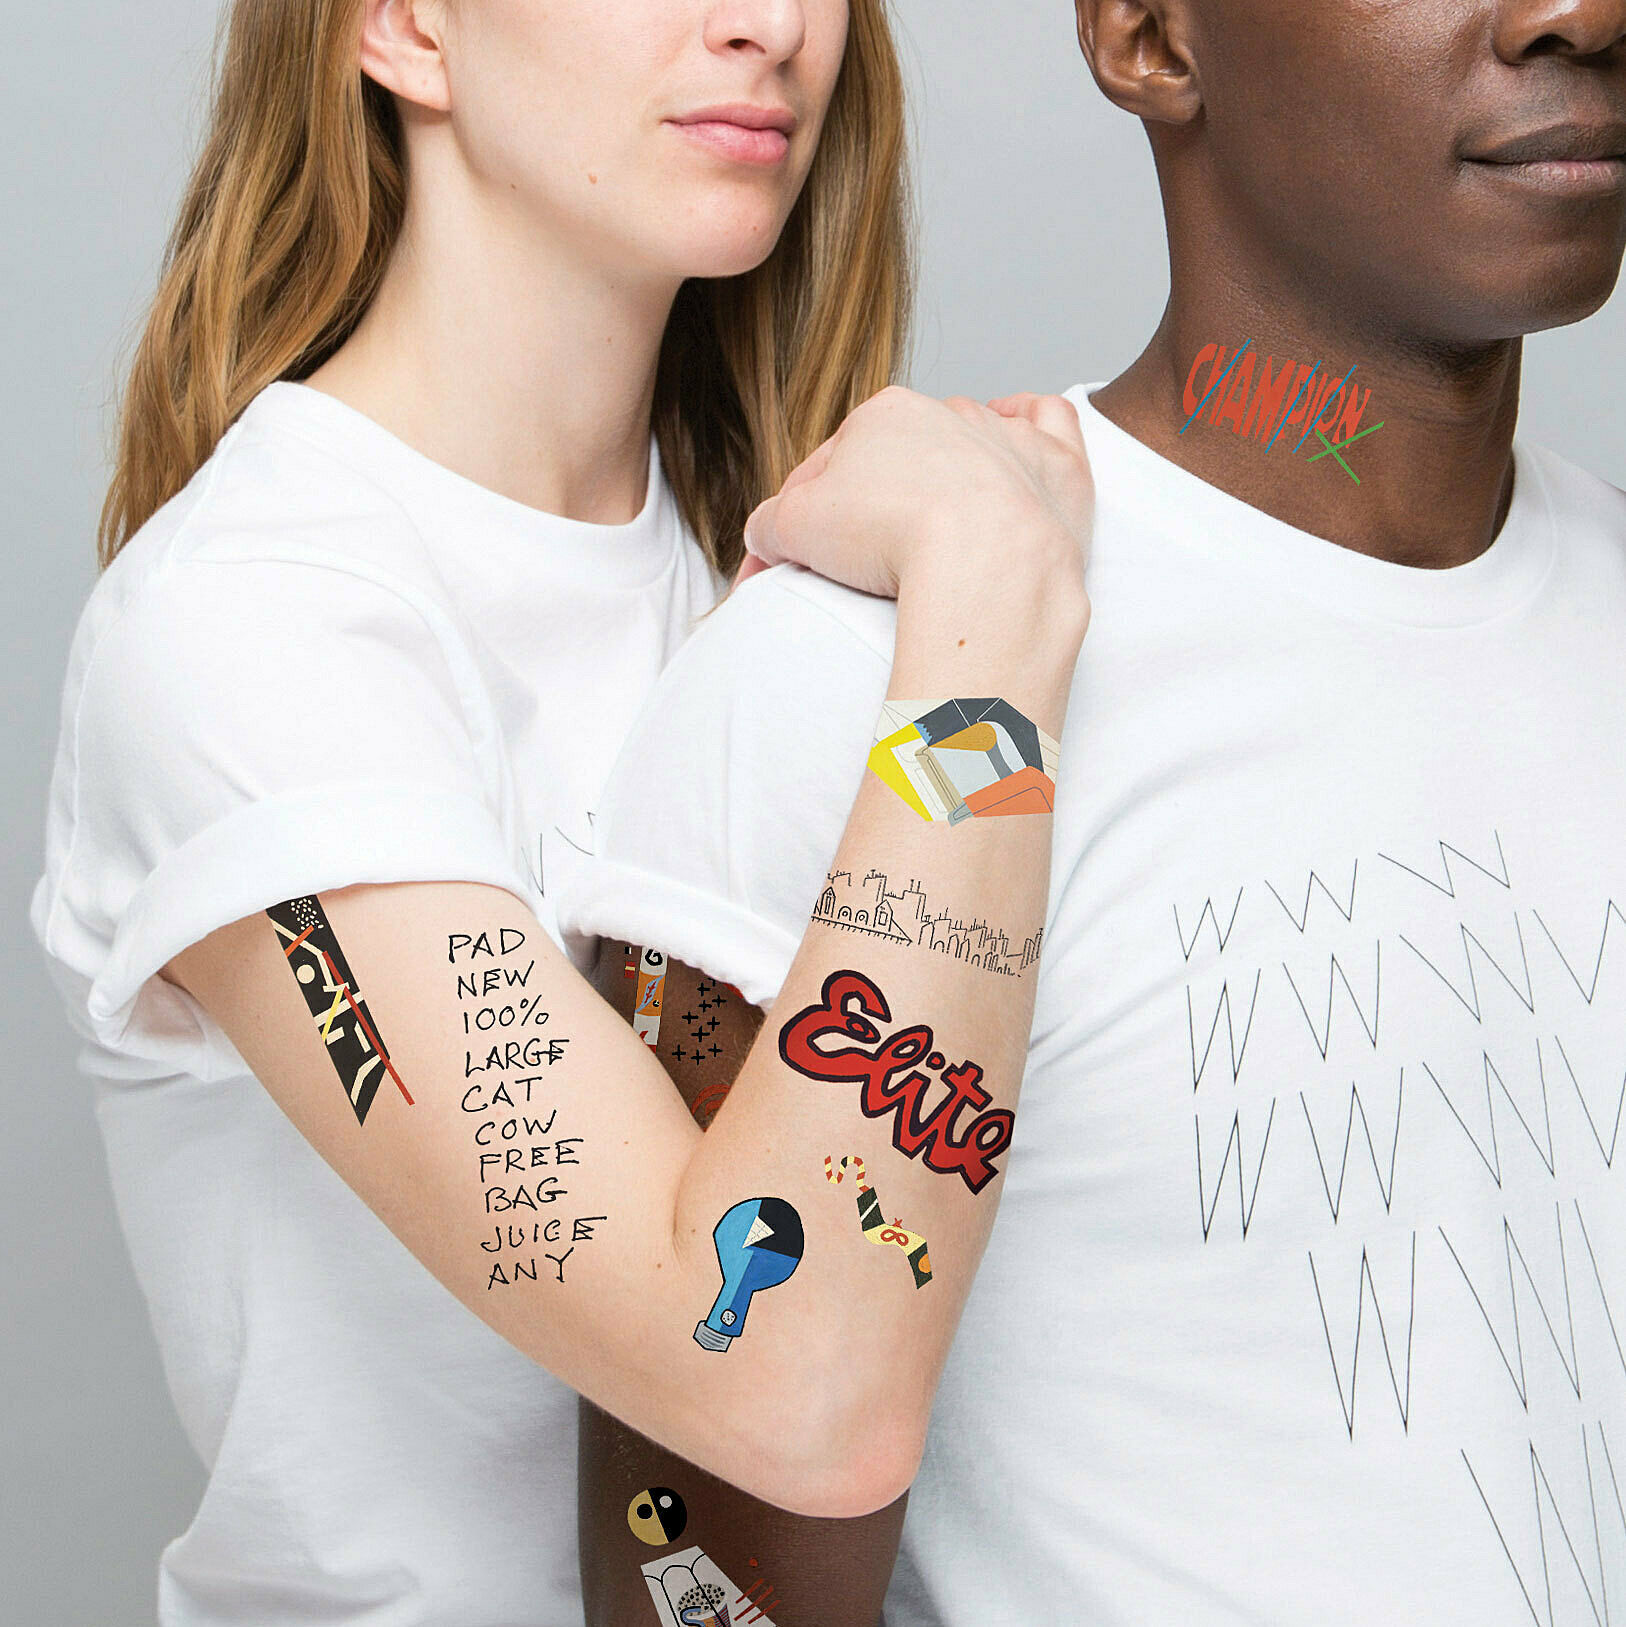 A model displays the custom tattoo set up Tattly on her arm.